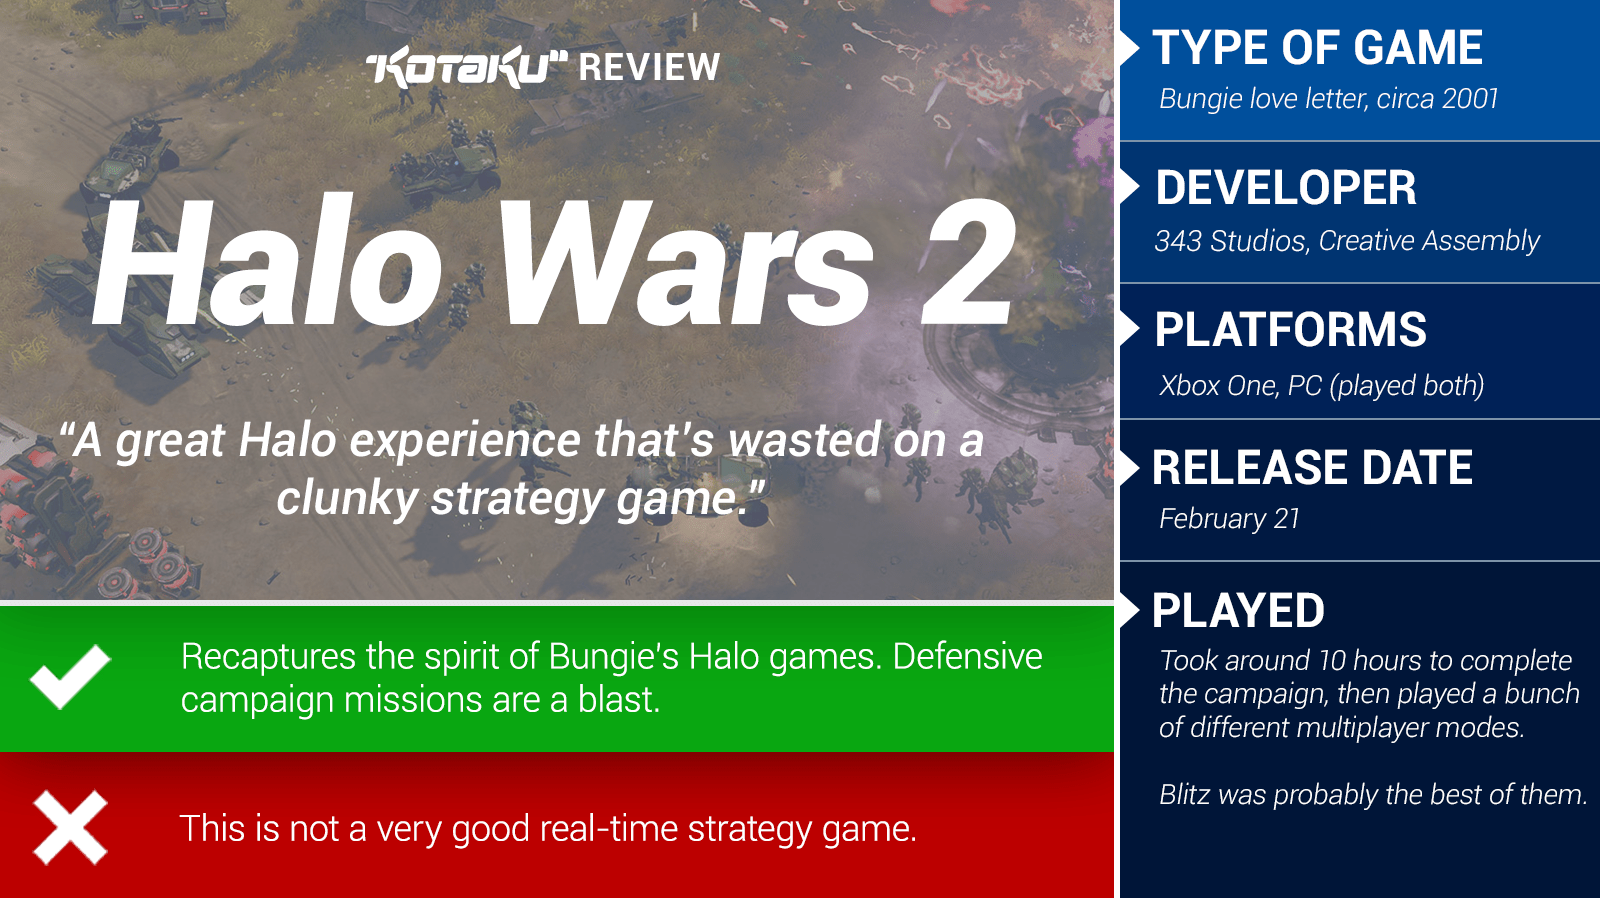 Halo Wars 2: The Kotaku Review